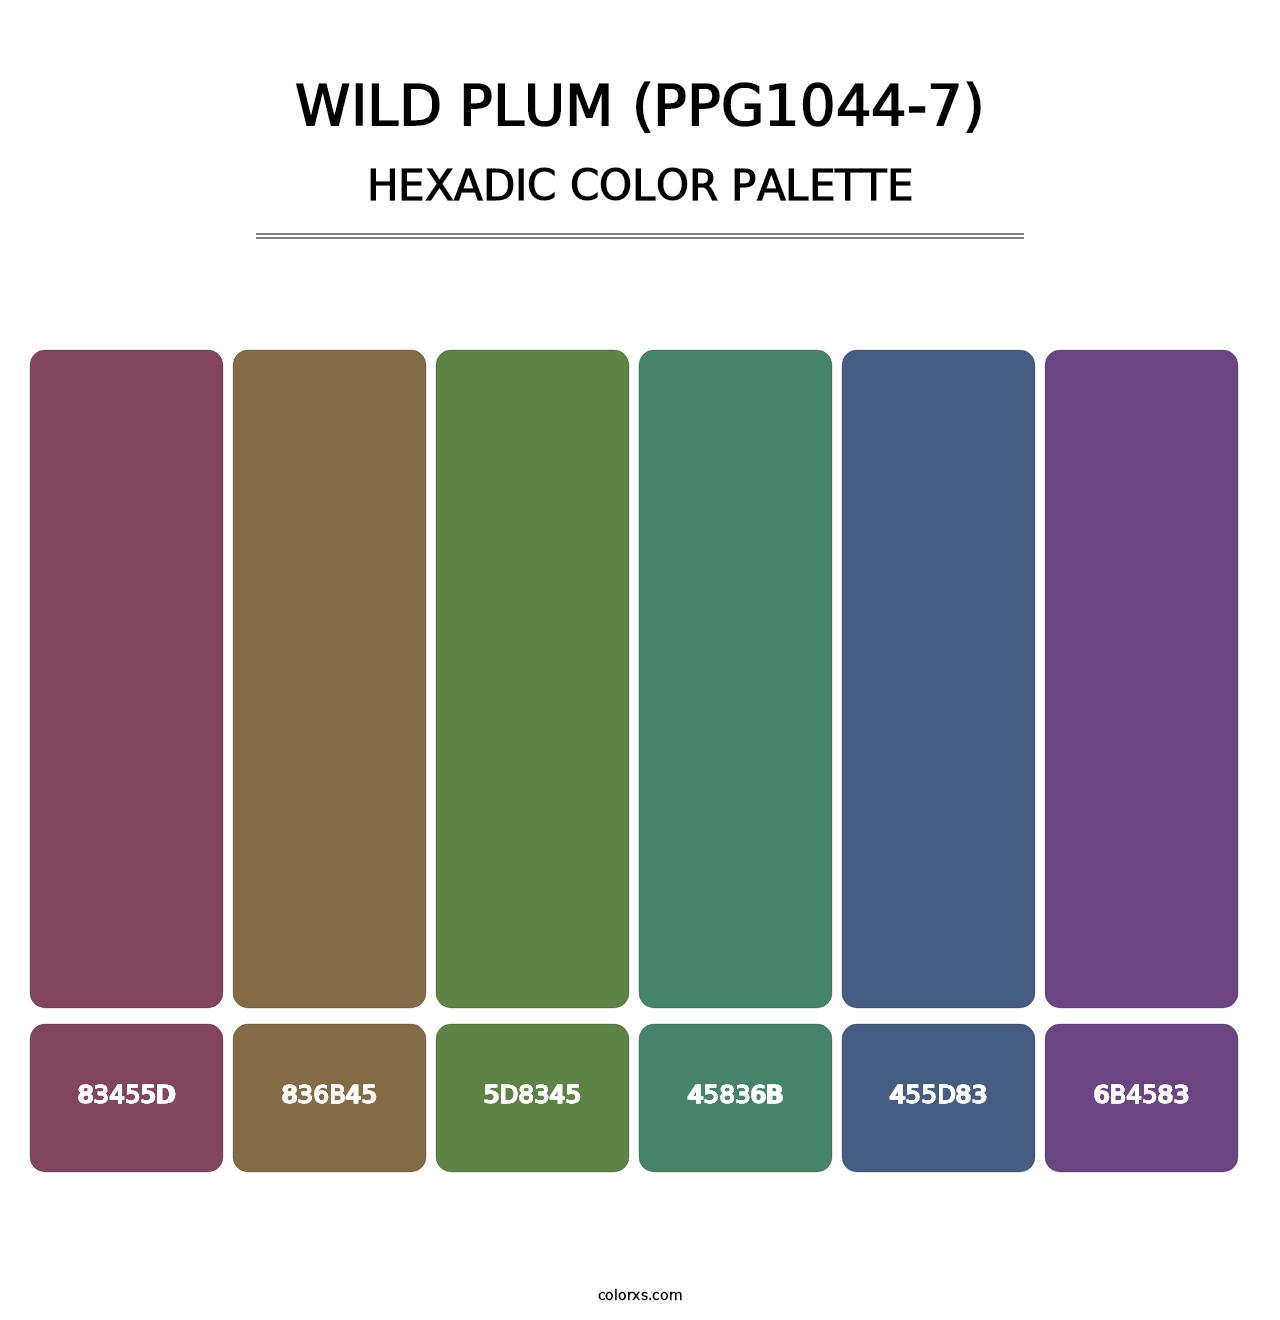 Wild Plum (PPG1044-7) - Hexadic Color Palette